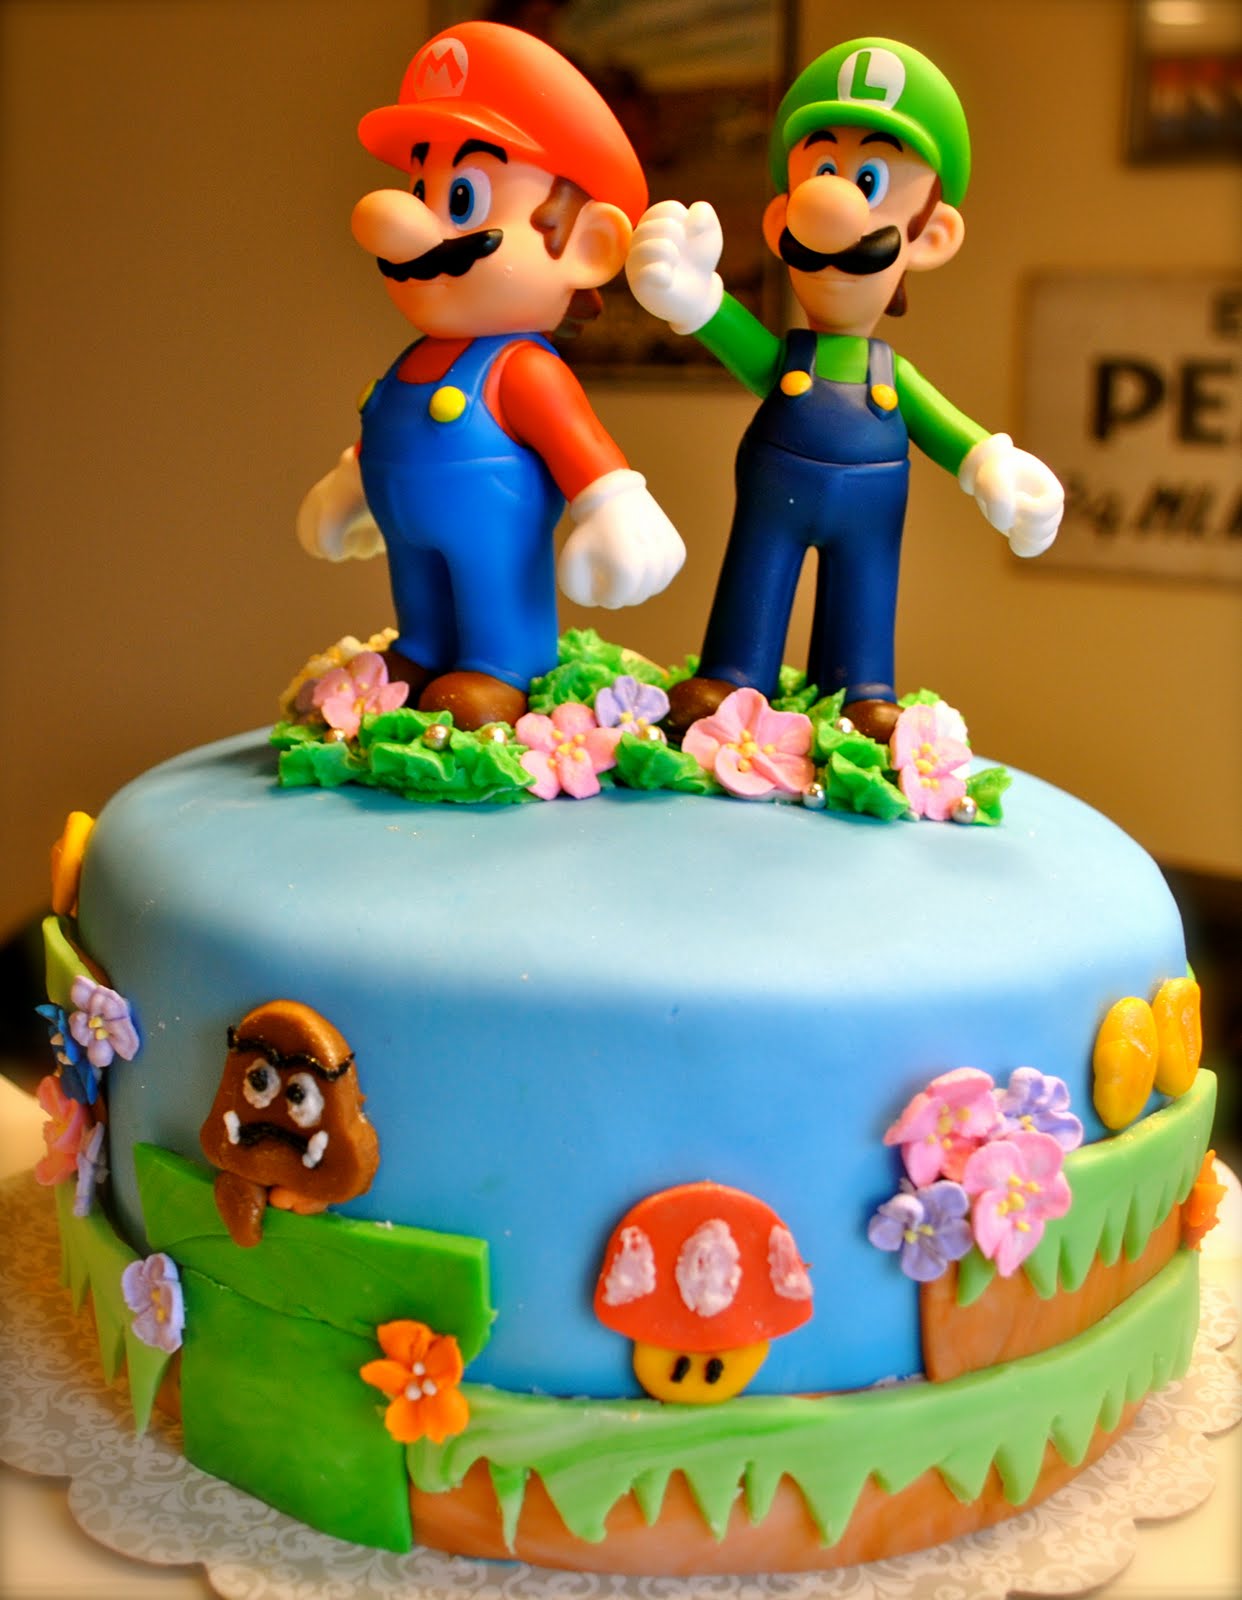 Mario Cakes - Decoration Ideas | Little Birthday Cakes